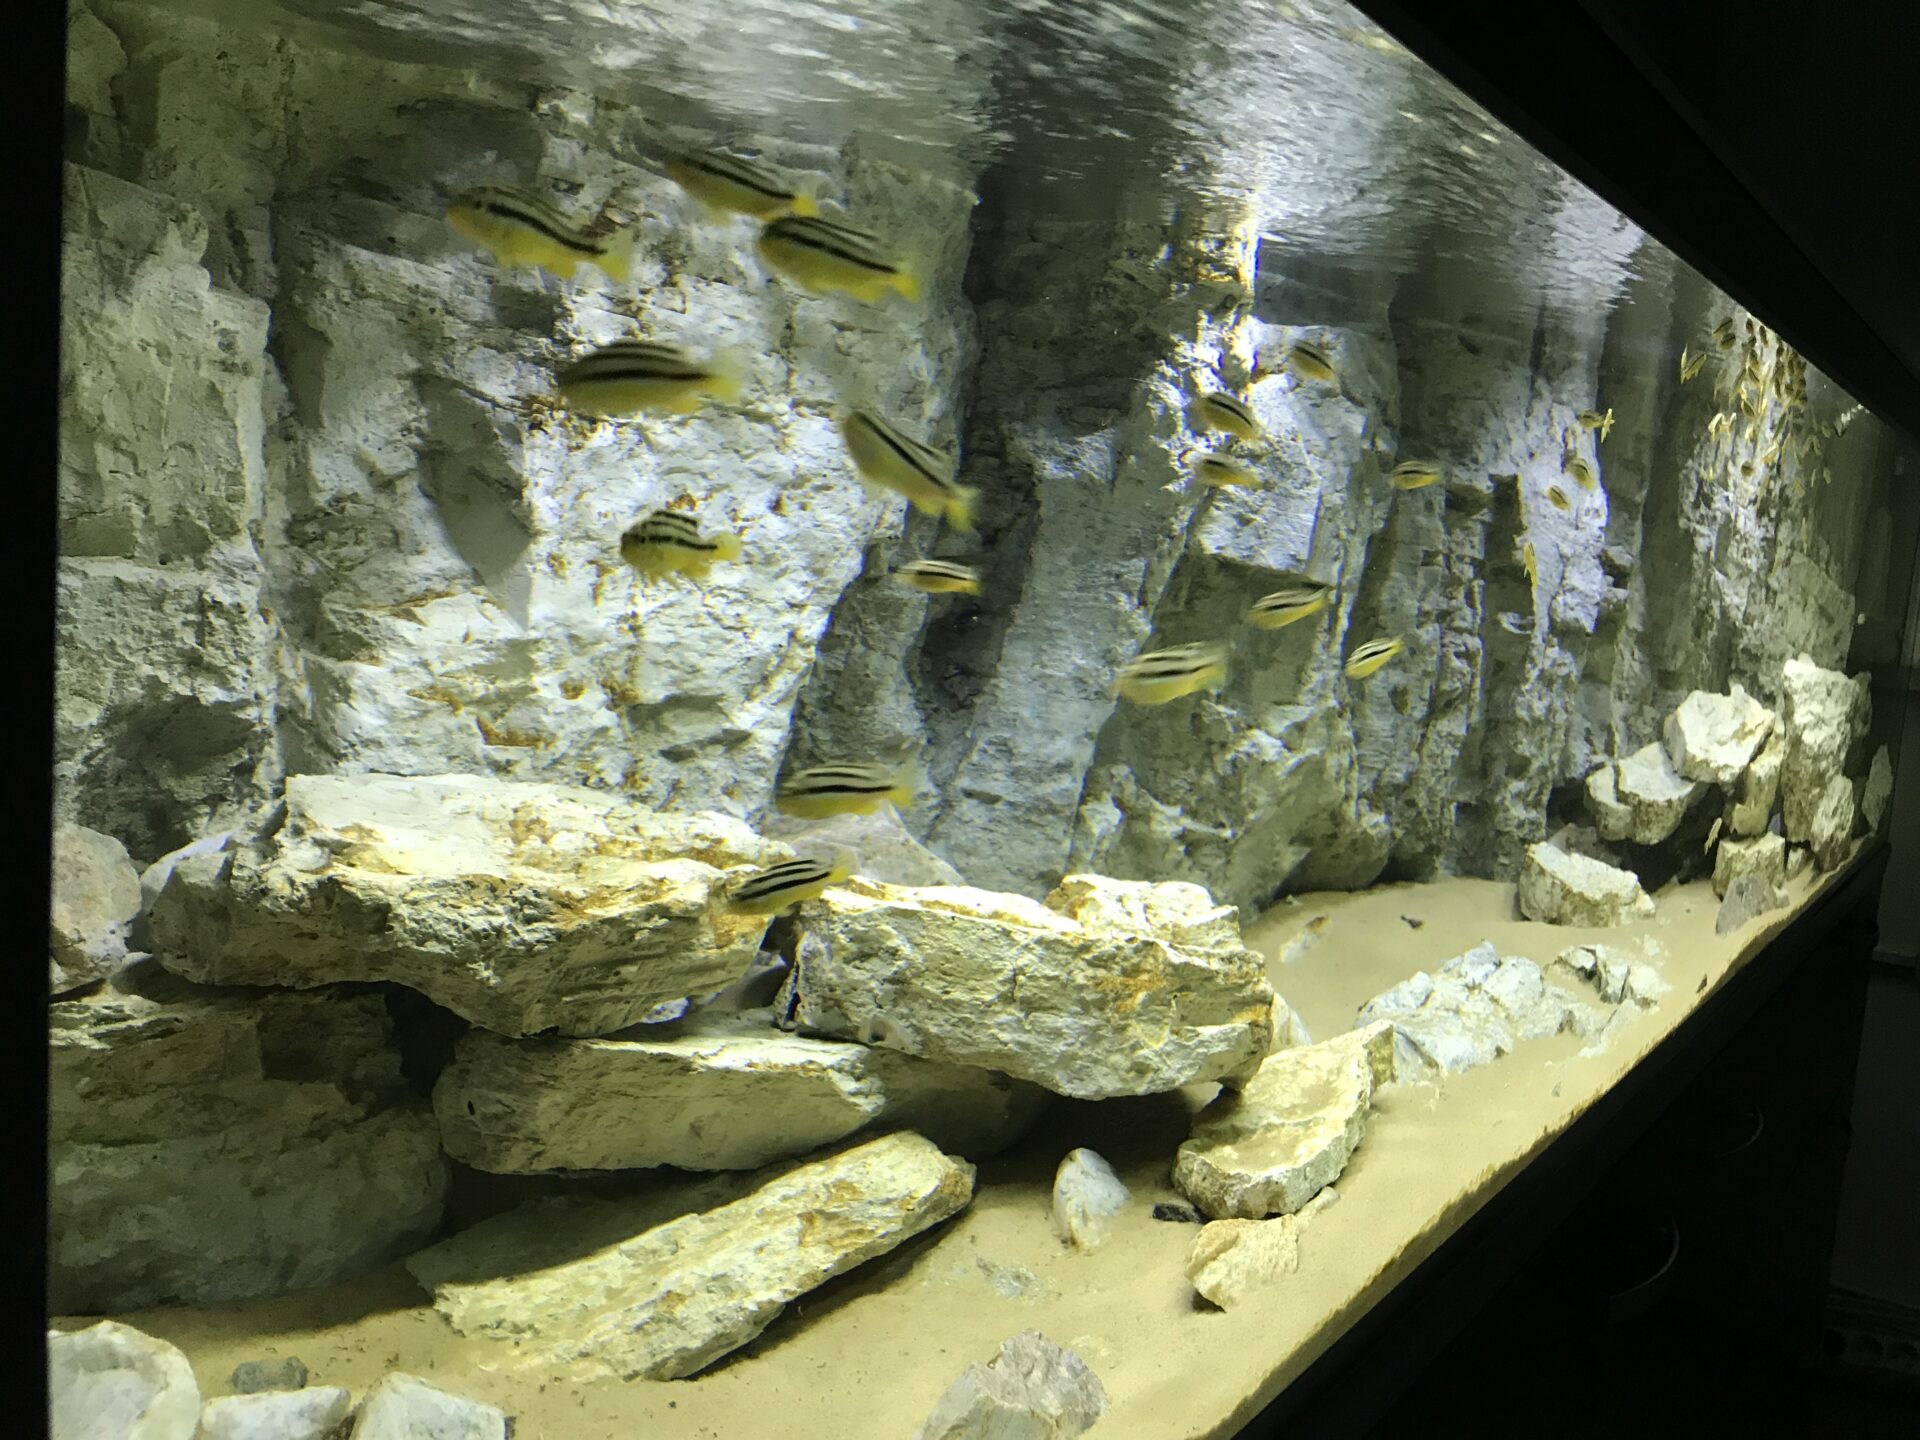 G MODELS - SLIM ROCKY MODELS 3d backgrounds for aquariums aquadecor decorations for fish tank